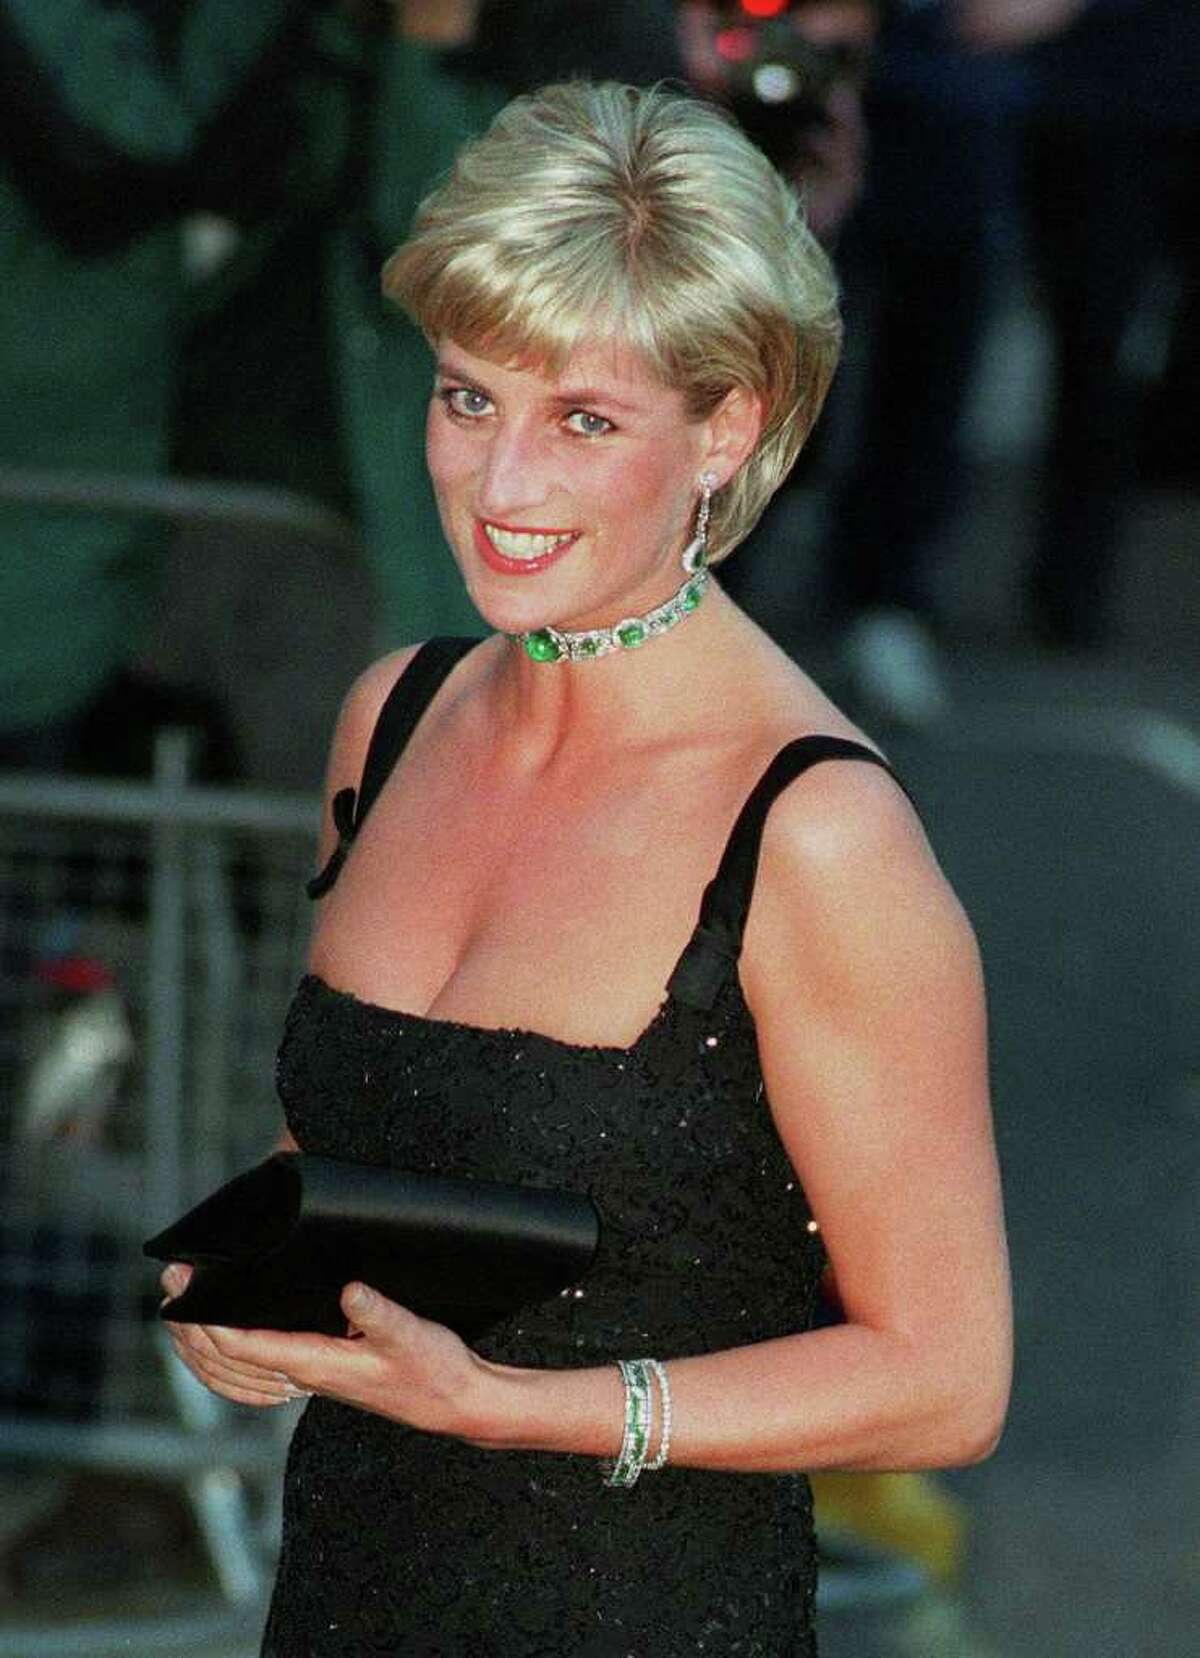 Princess Diana would be 50